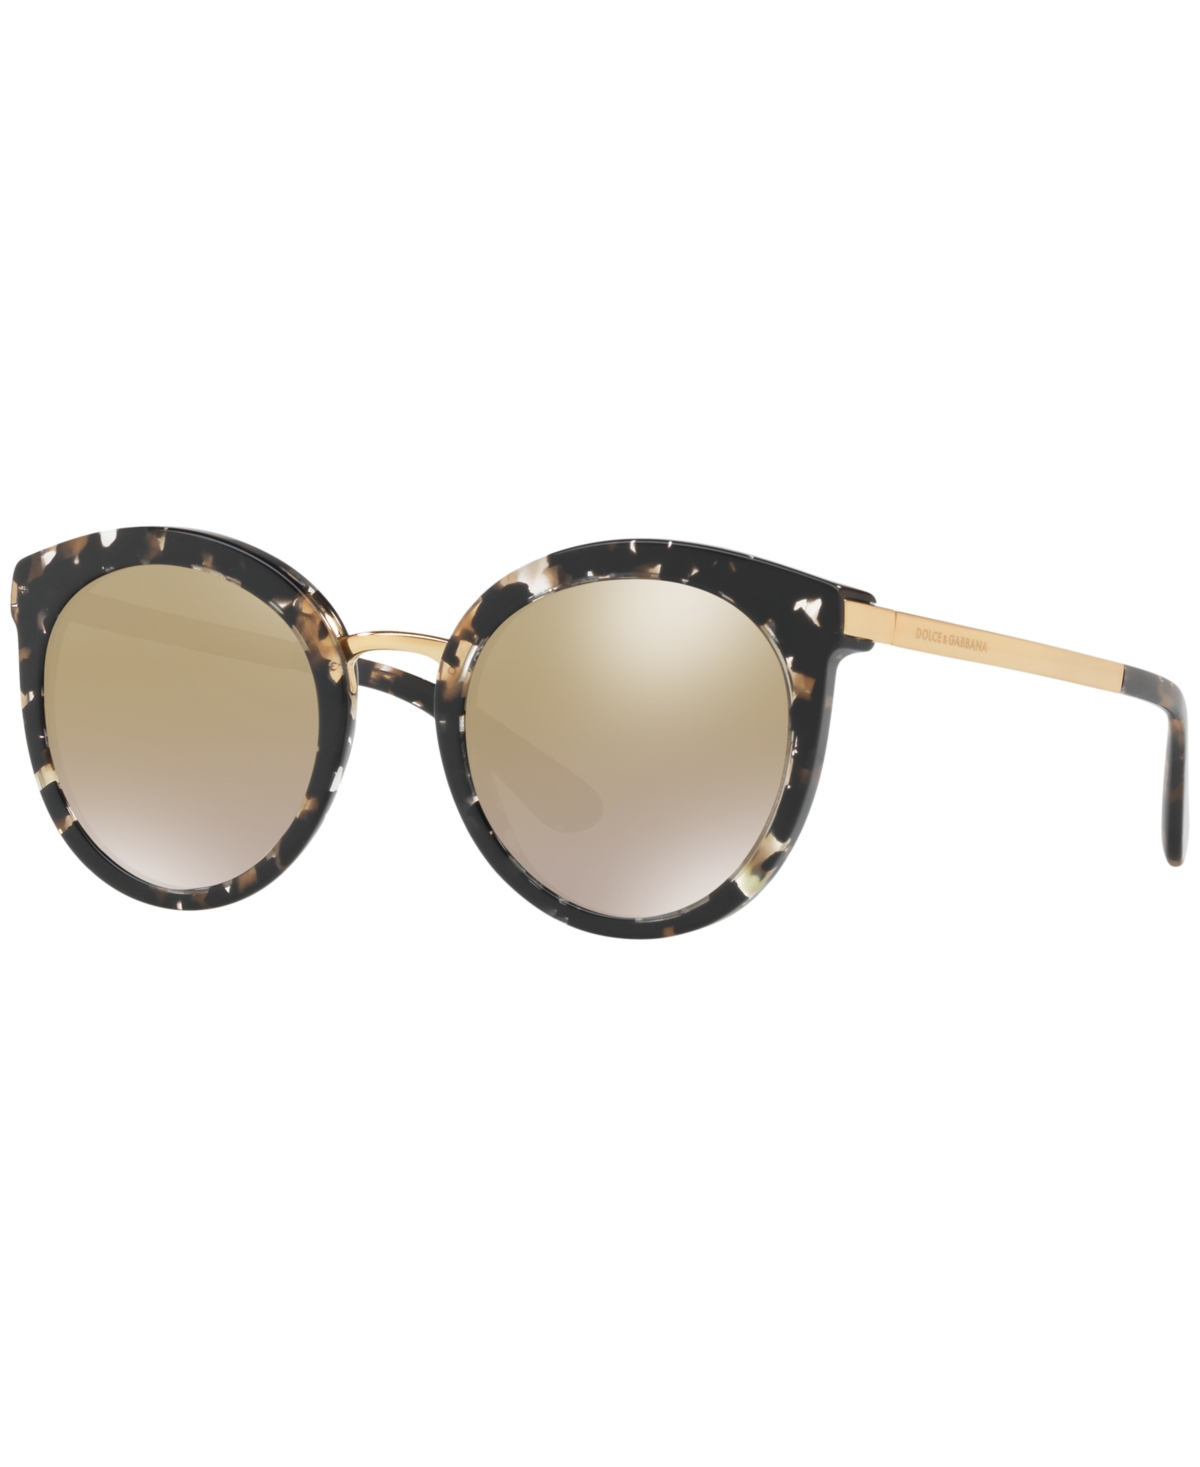 Dolce&Gabbana Sunglasses, DG4268 - BLACK/BROWN GRADIENT MIRROR